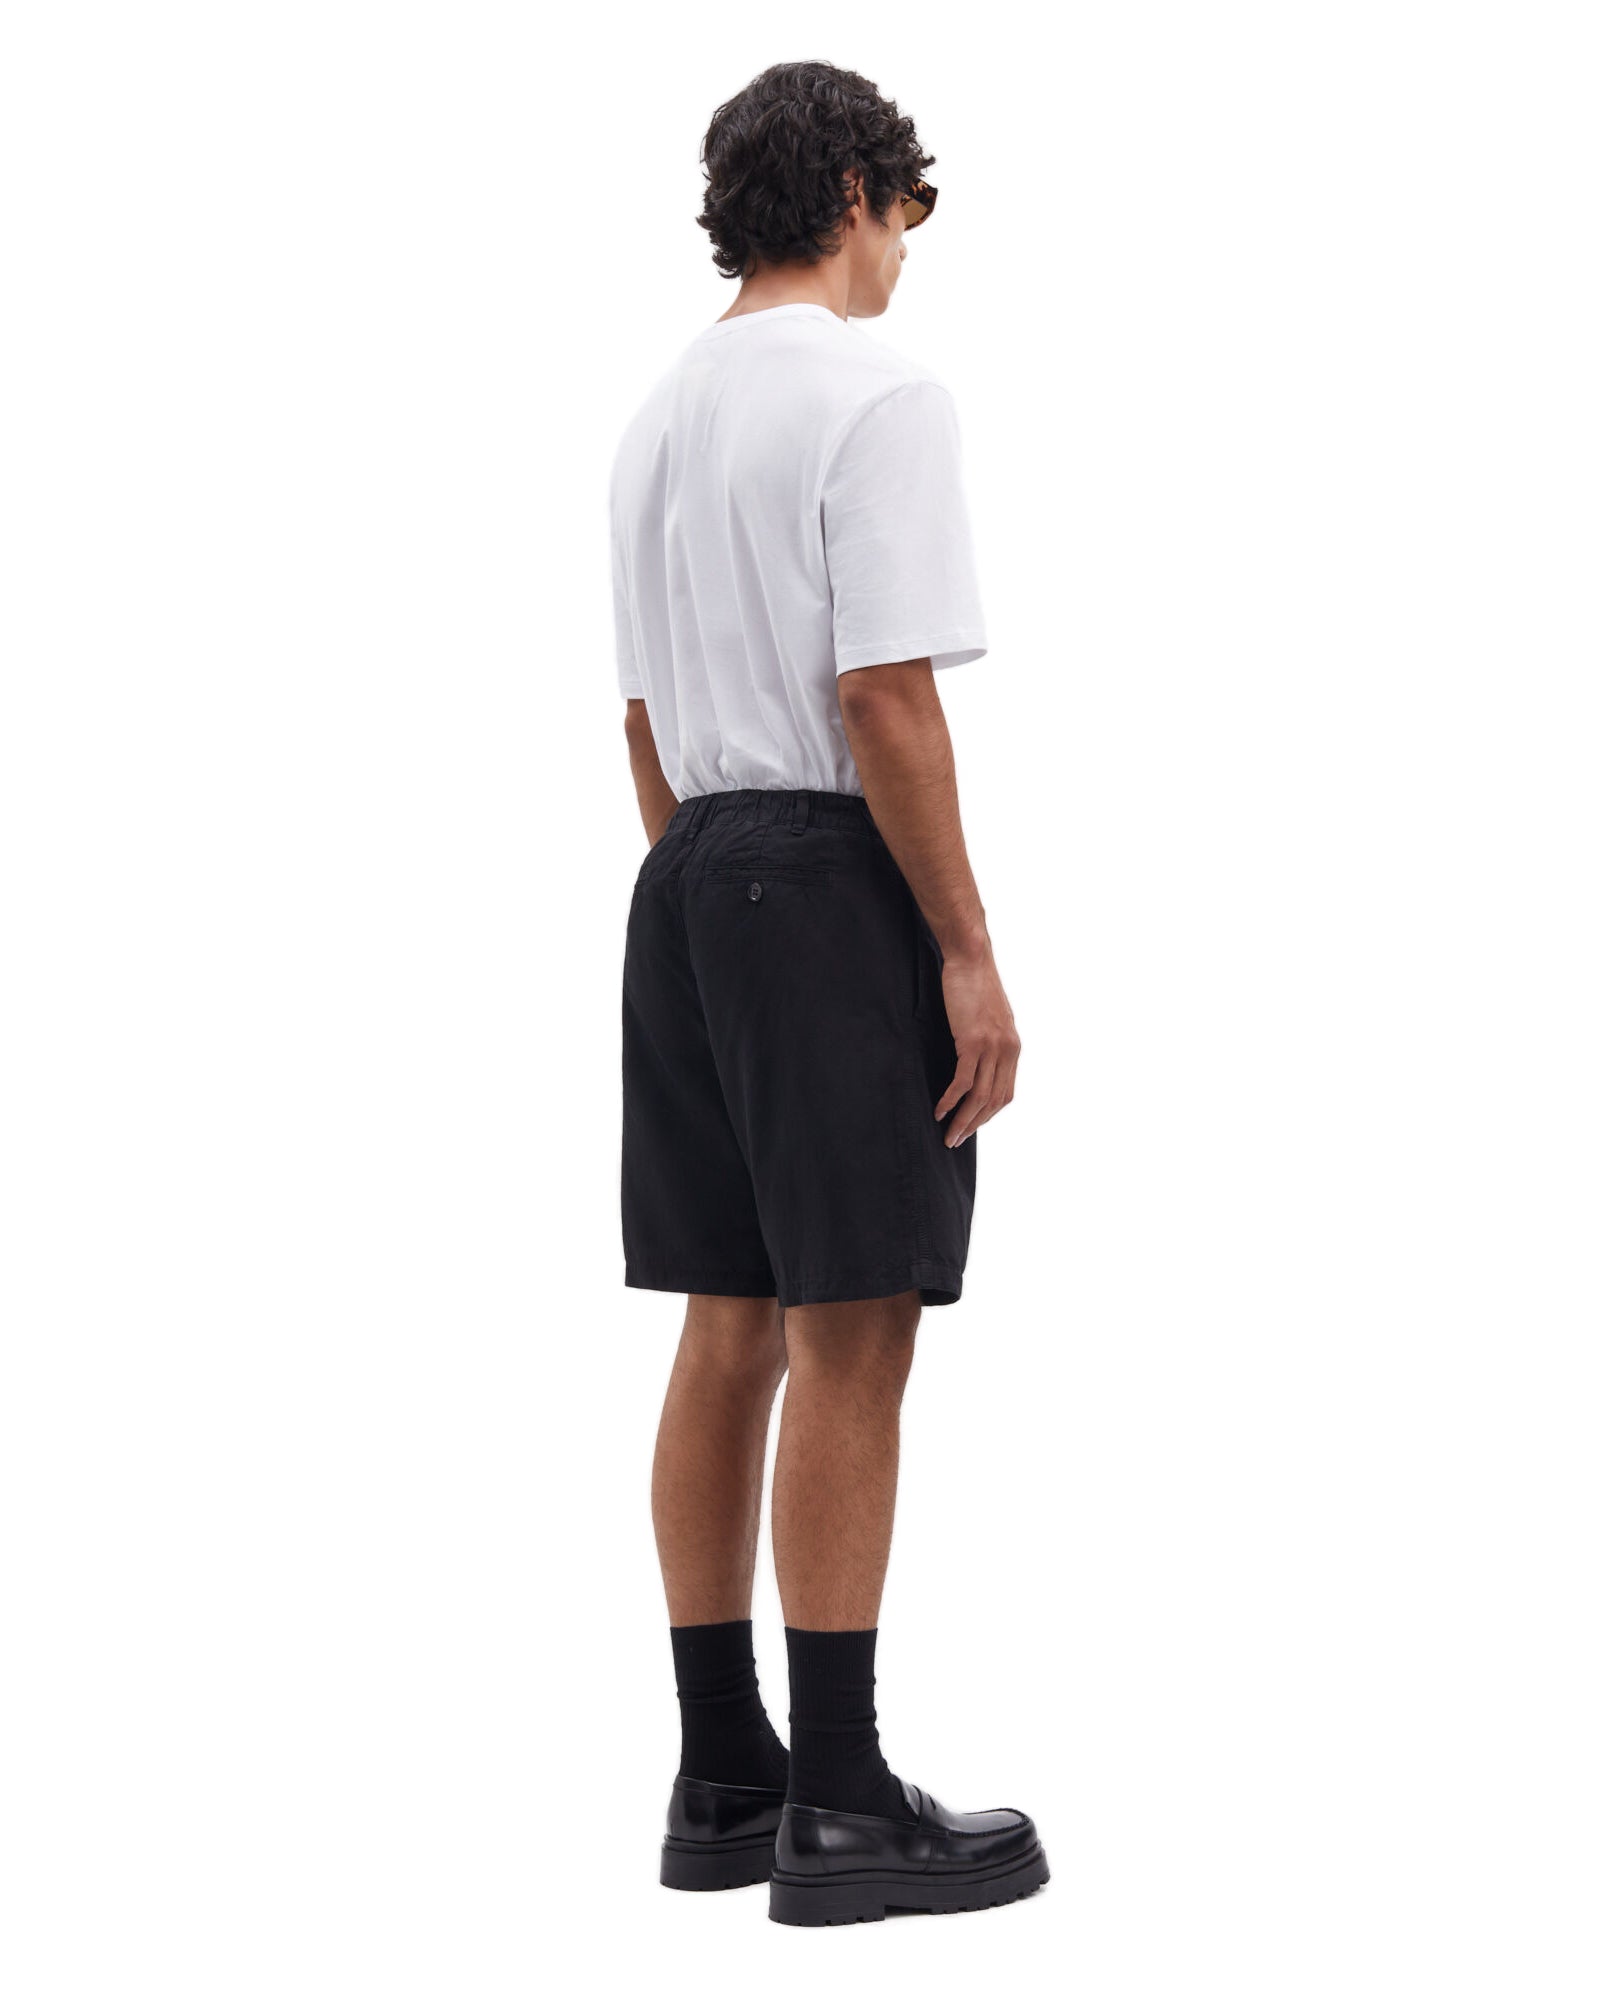 Pantalons Short Sahammel 15241 - Negre